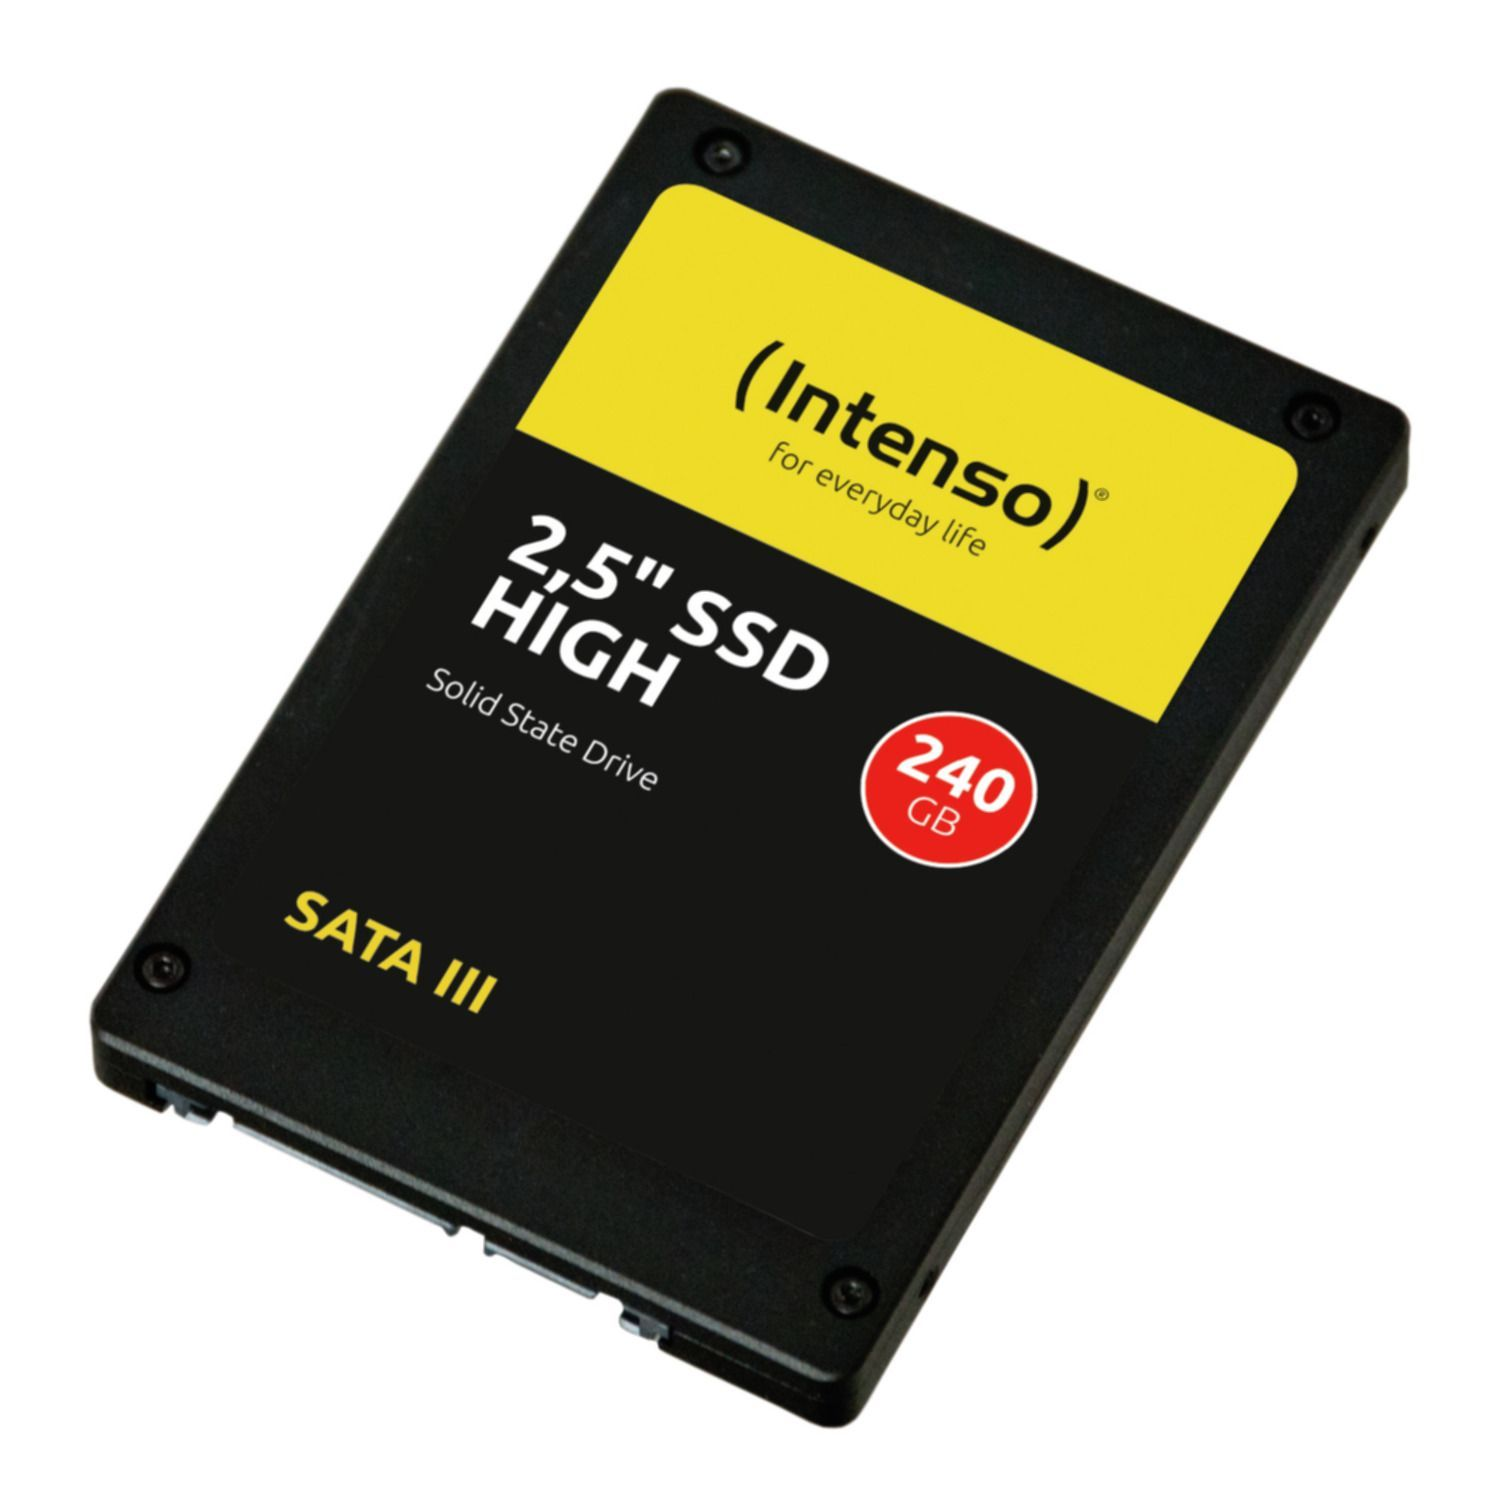 intern INTENSO 2,5 High, SSD, GB, 240 Zoll,